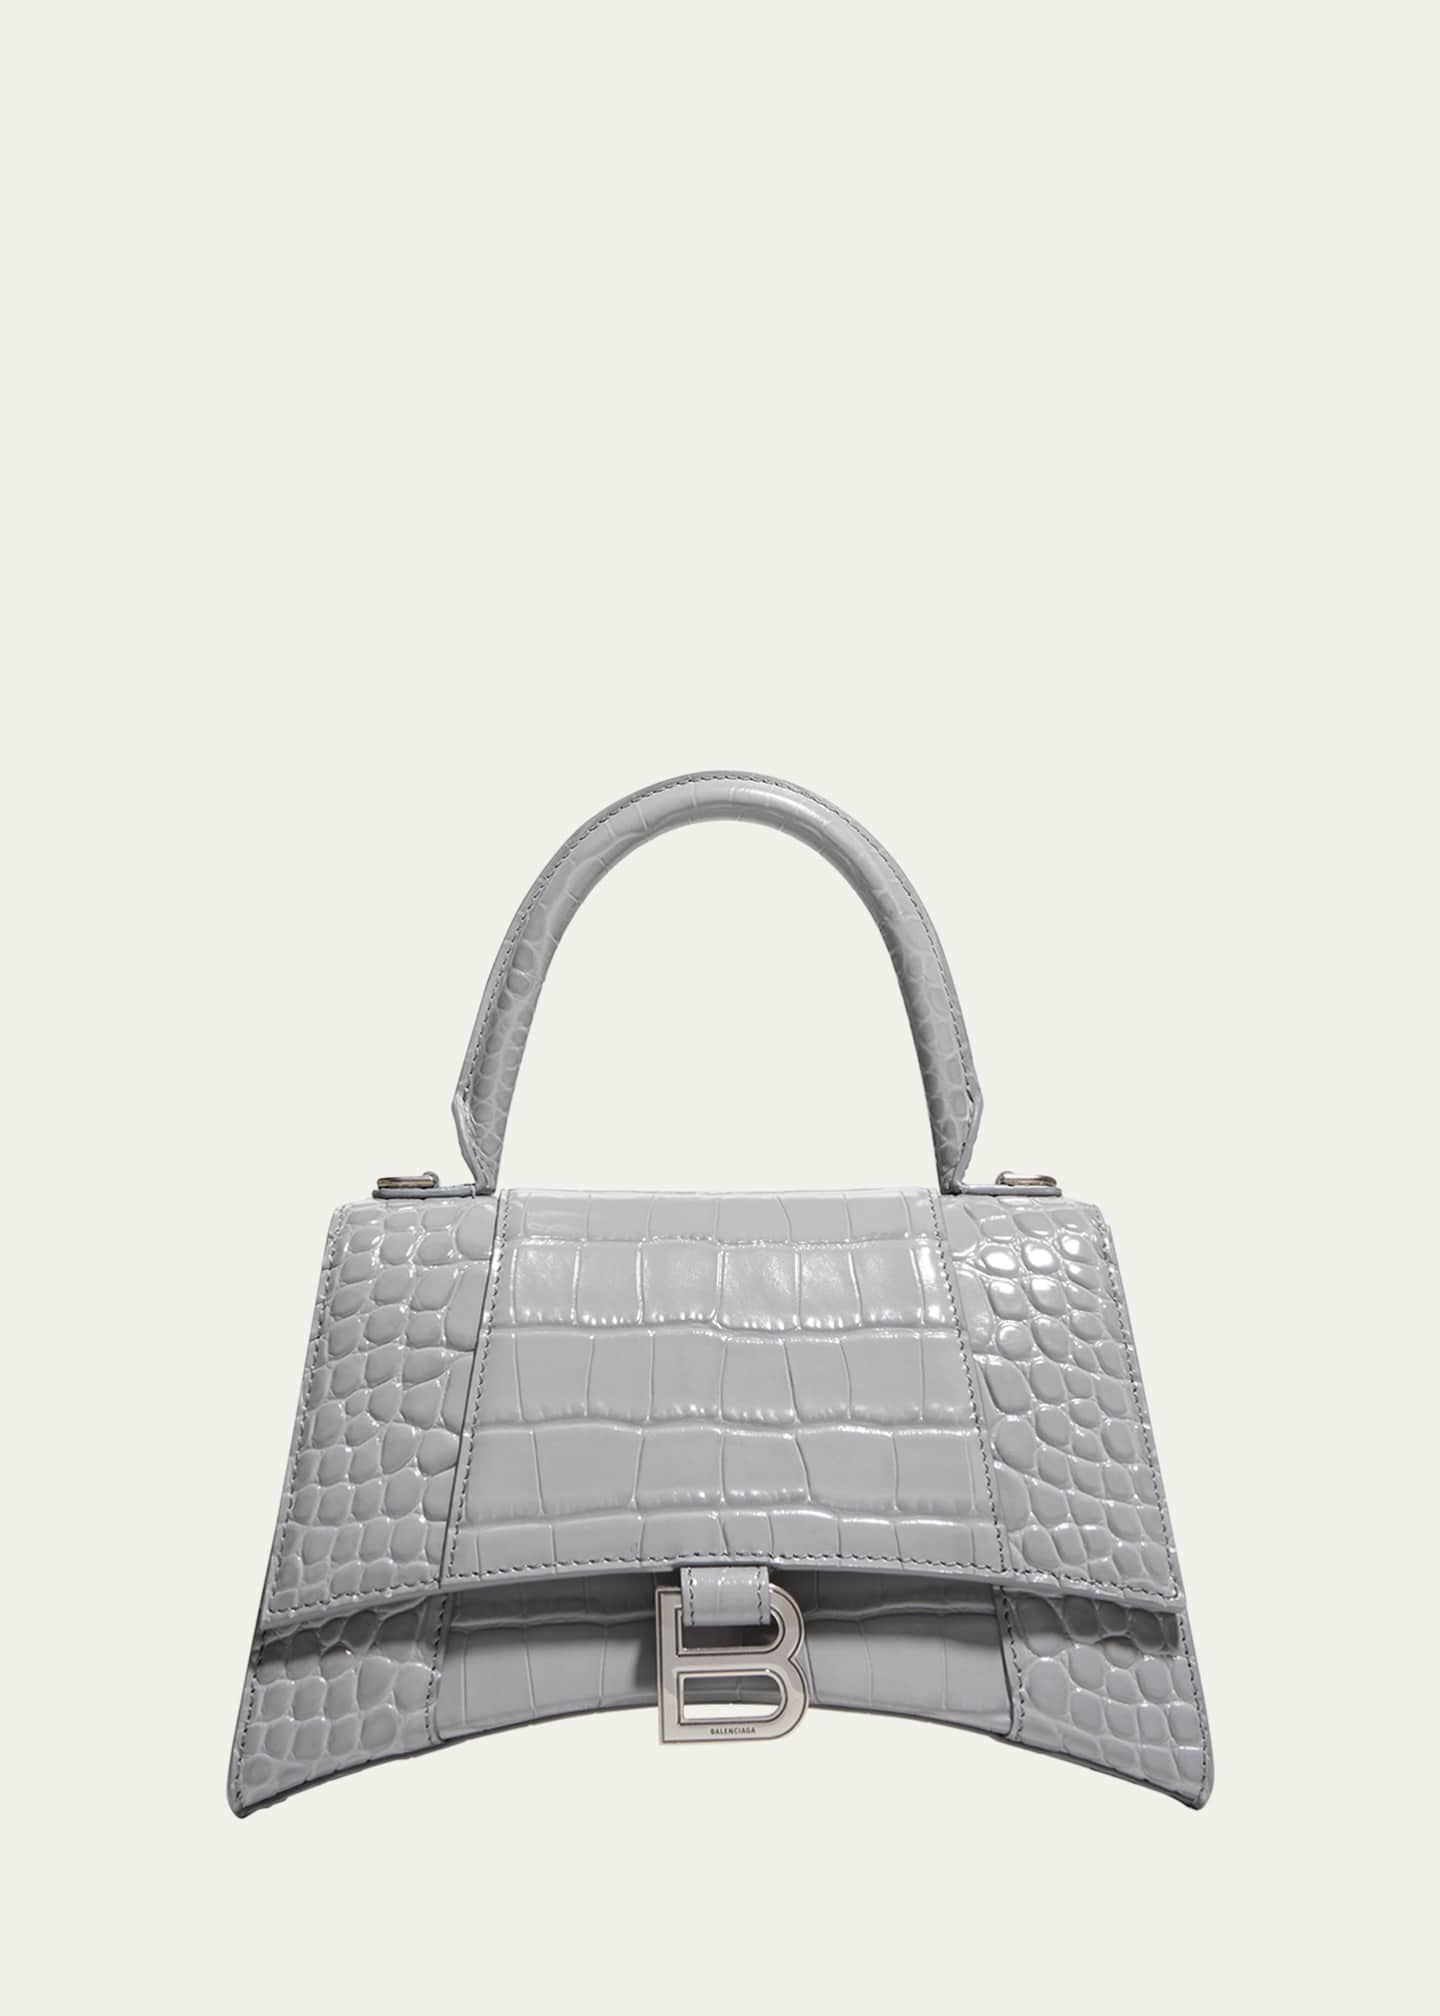 Balenciaga Small Hourglass Croc Embossed Black Leather Top Handle Bag New